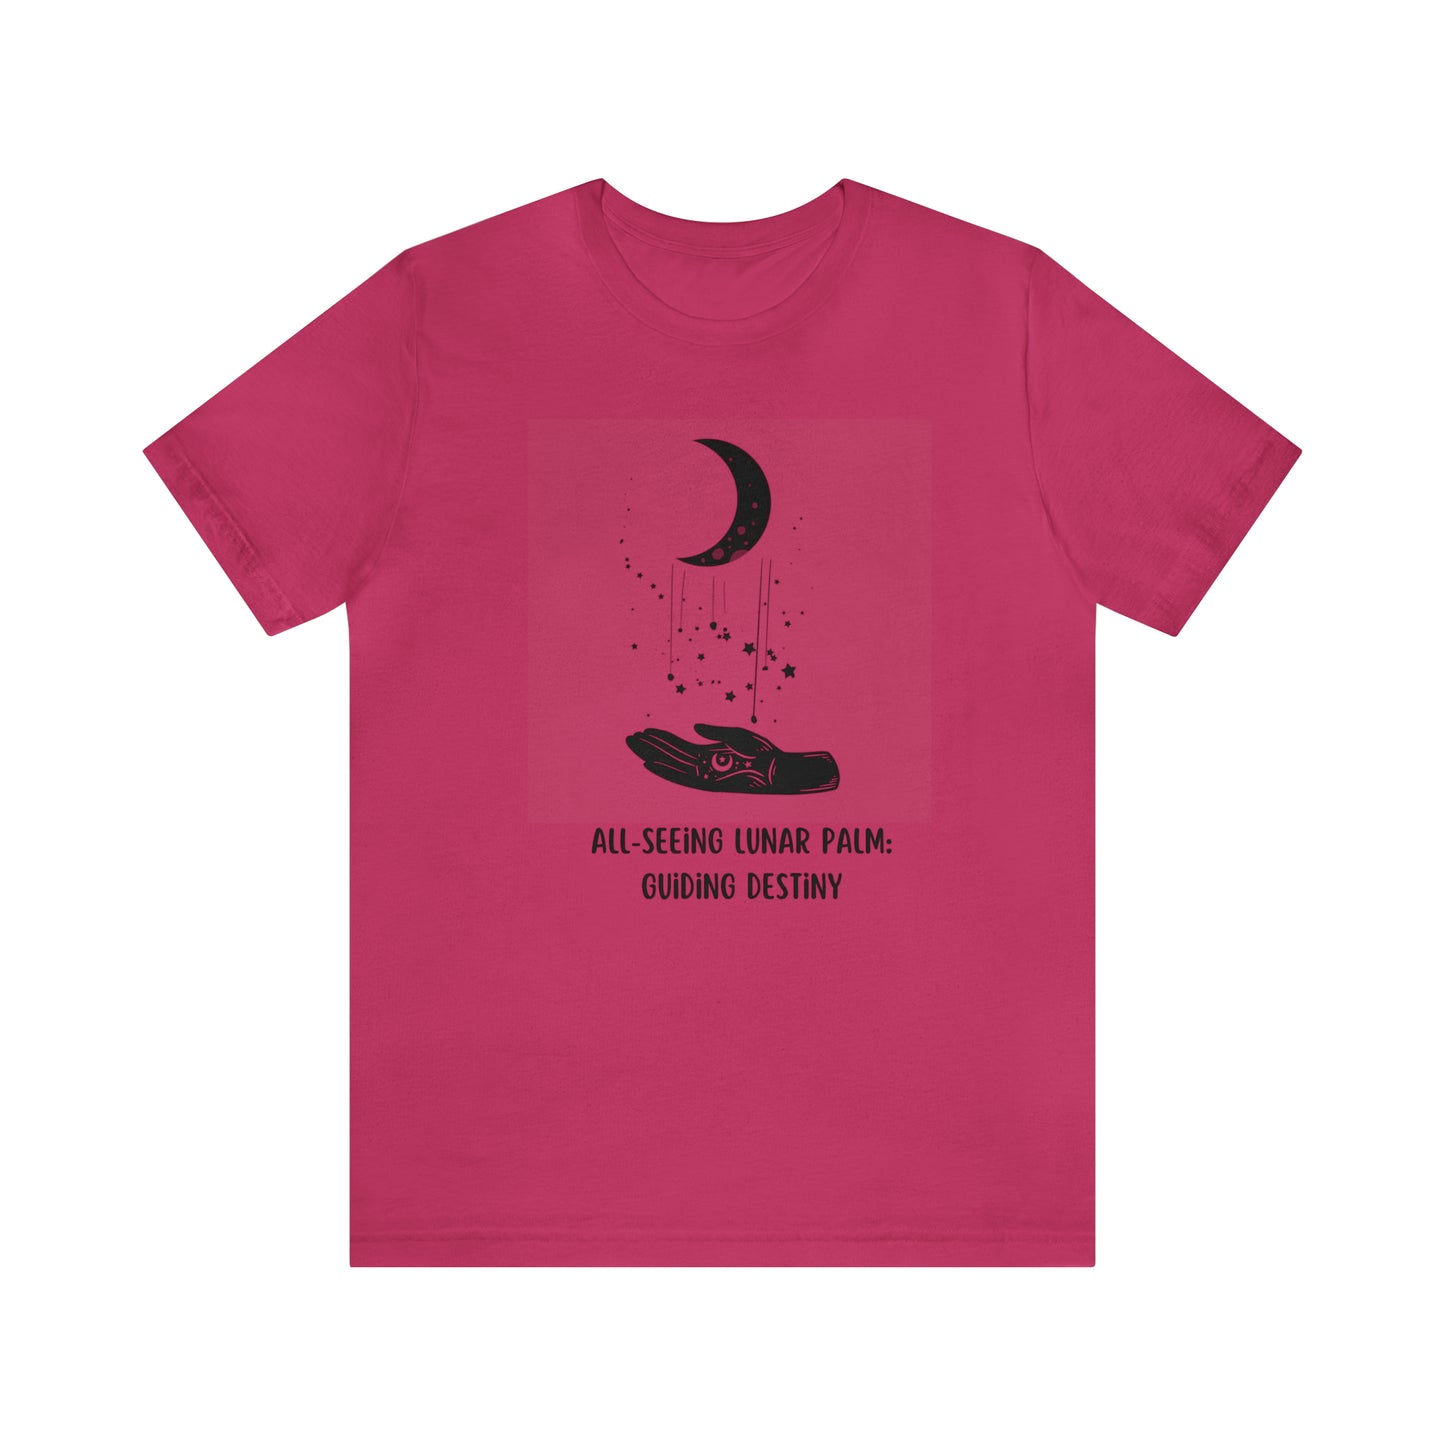 All Seeing Eye T-Shirt, All Seeing Luna Palm: Guiding Destiny Shirt, Celestial Shirt, Moon Shirt, Witchy Woman T-Shirt, Luna Shirt Unisex